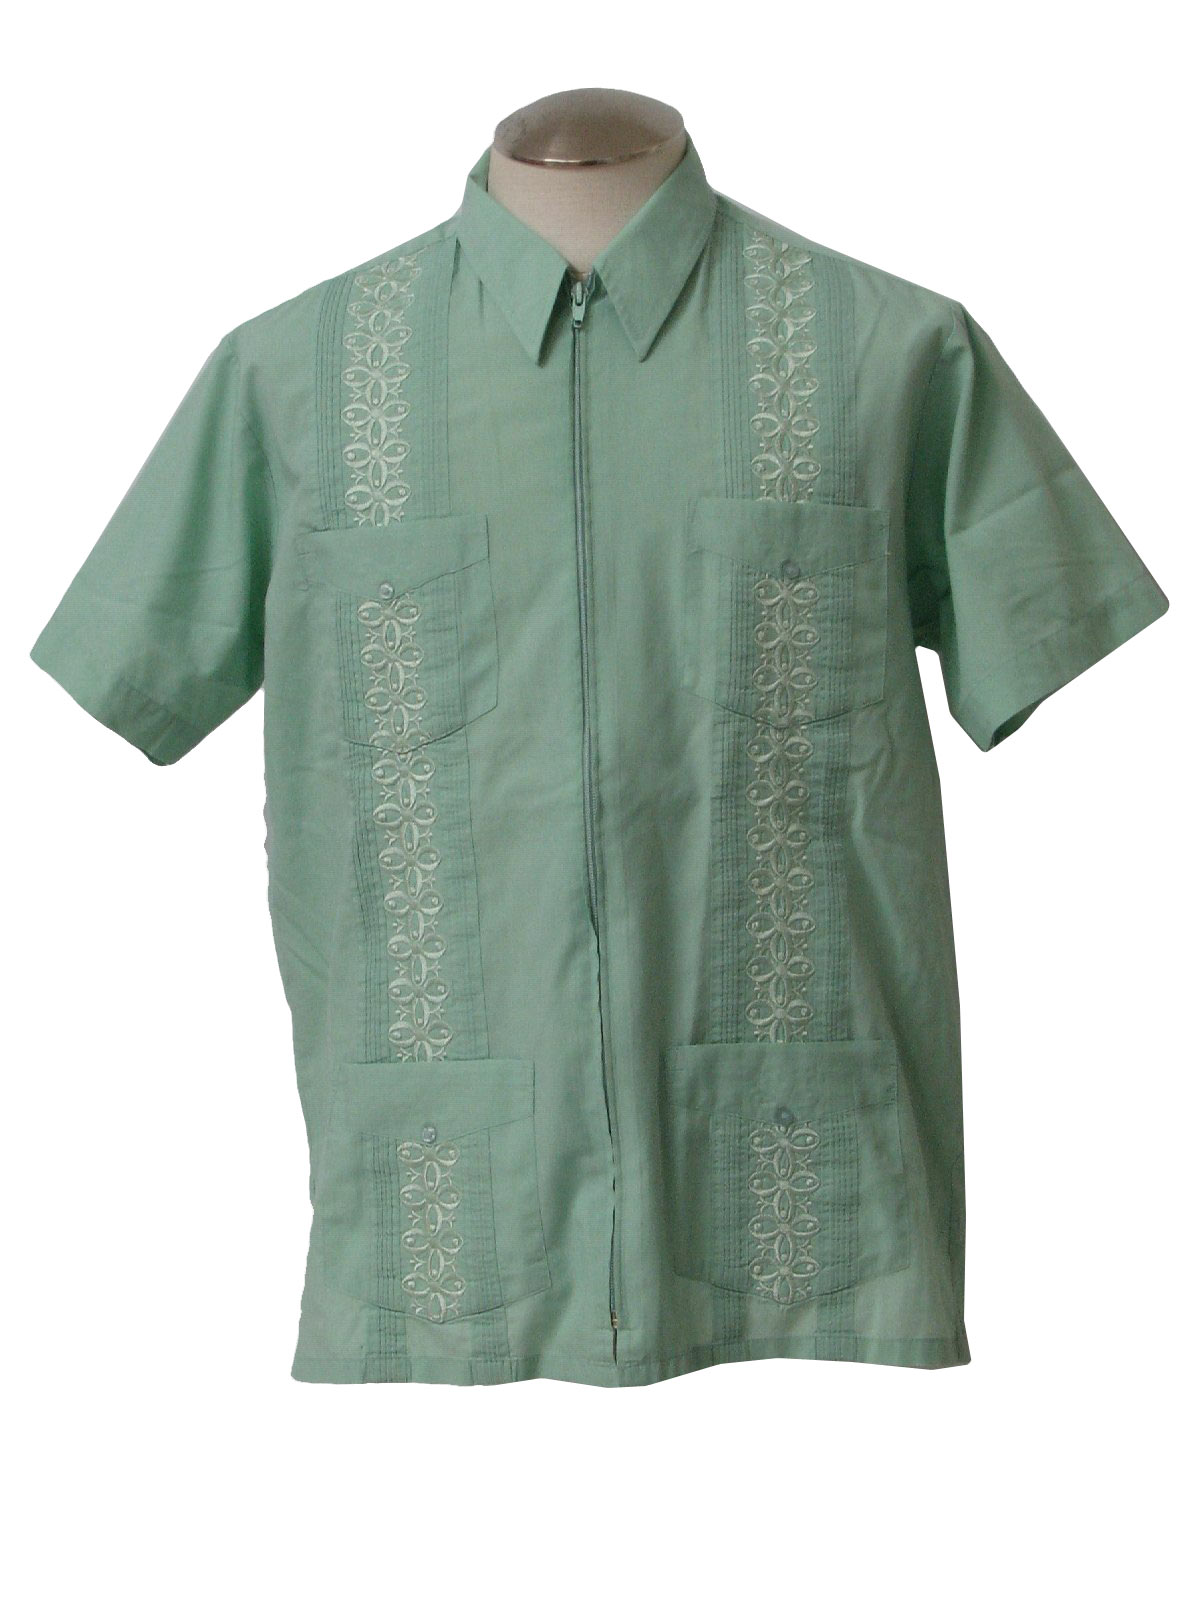 Vintage 80s Guayabera Shirt: 80s -Haband guayabera- Mens light teal ...